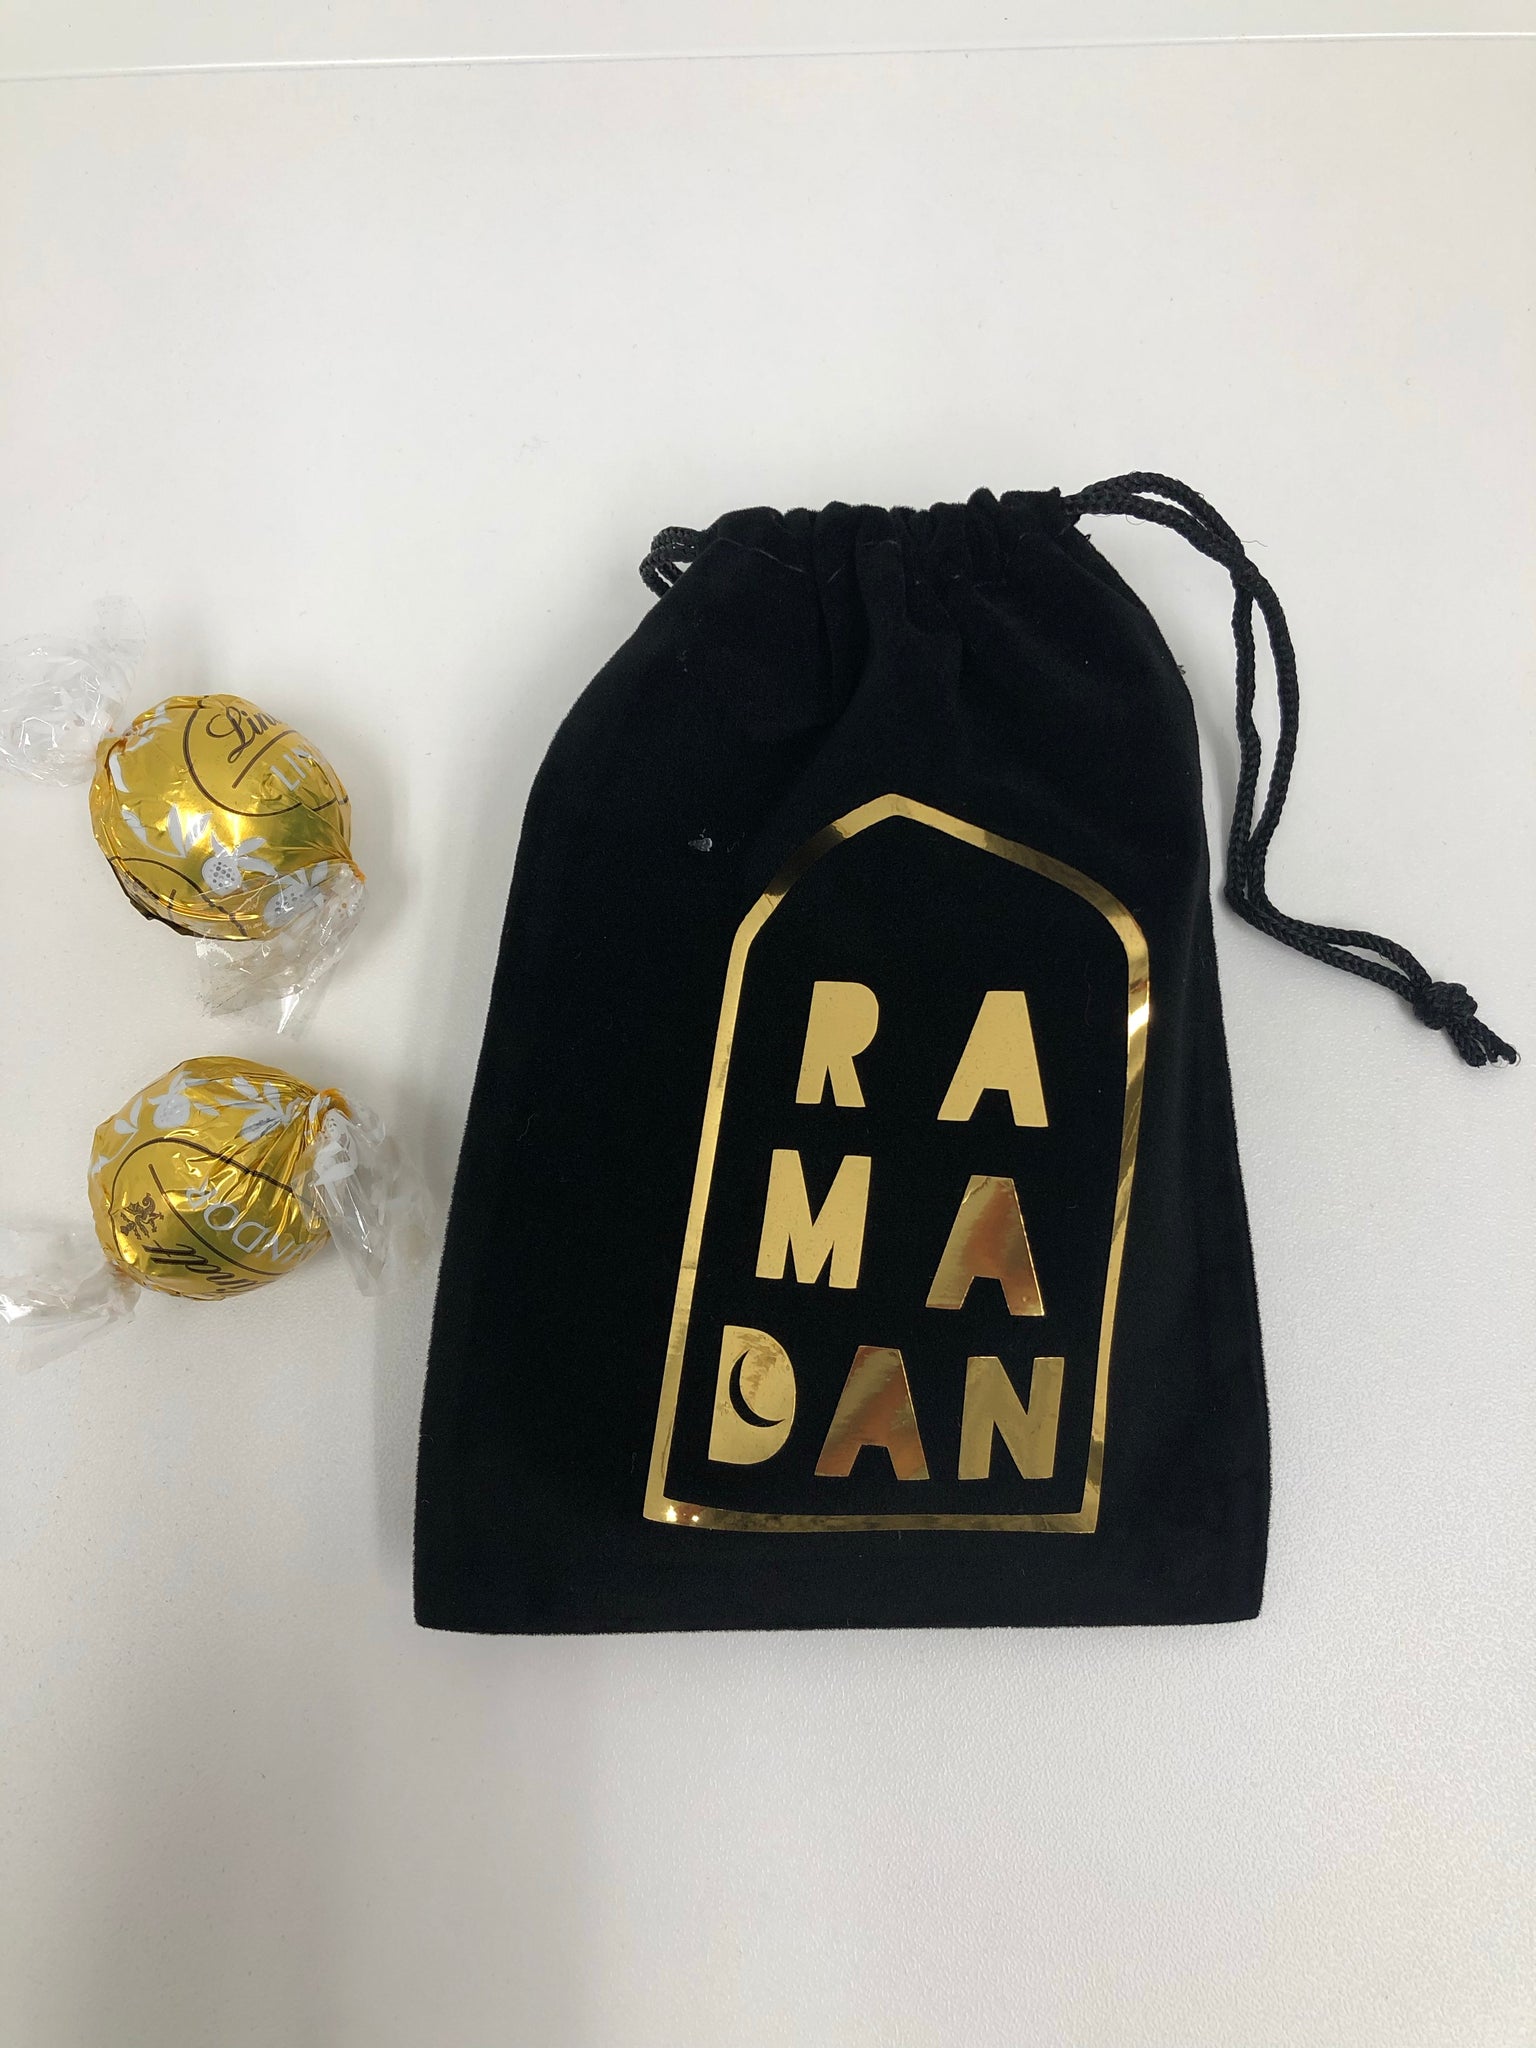 Ramadan Favor Bags (Set of 6)